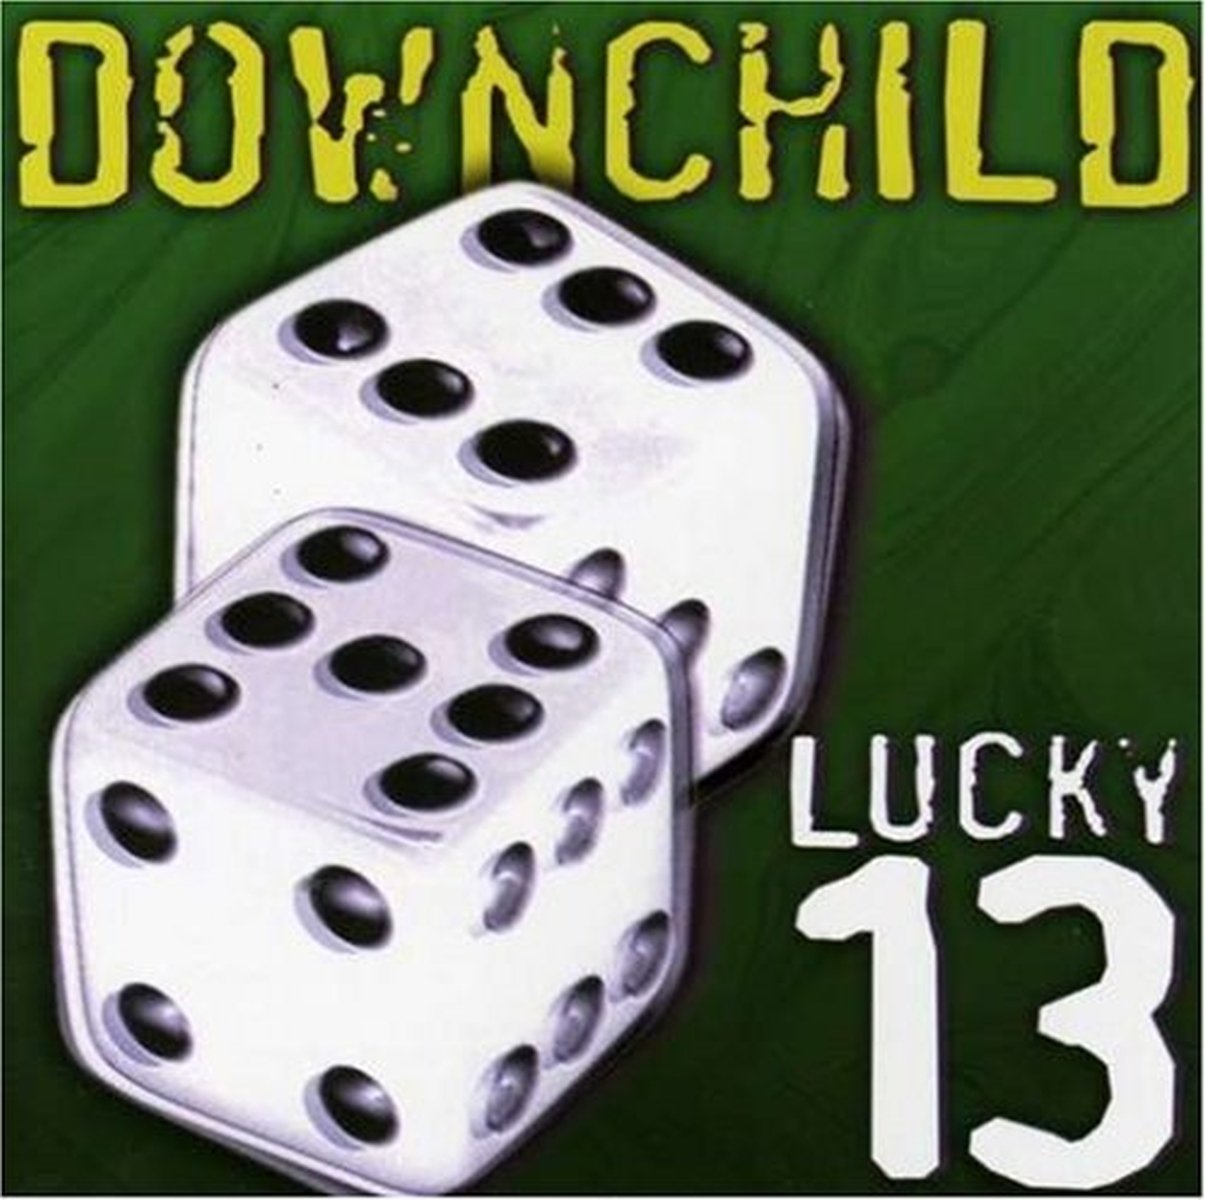 Lucky 13 on MovieShack